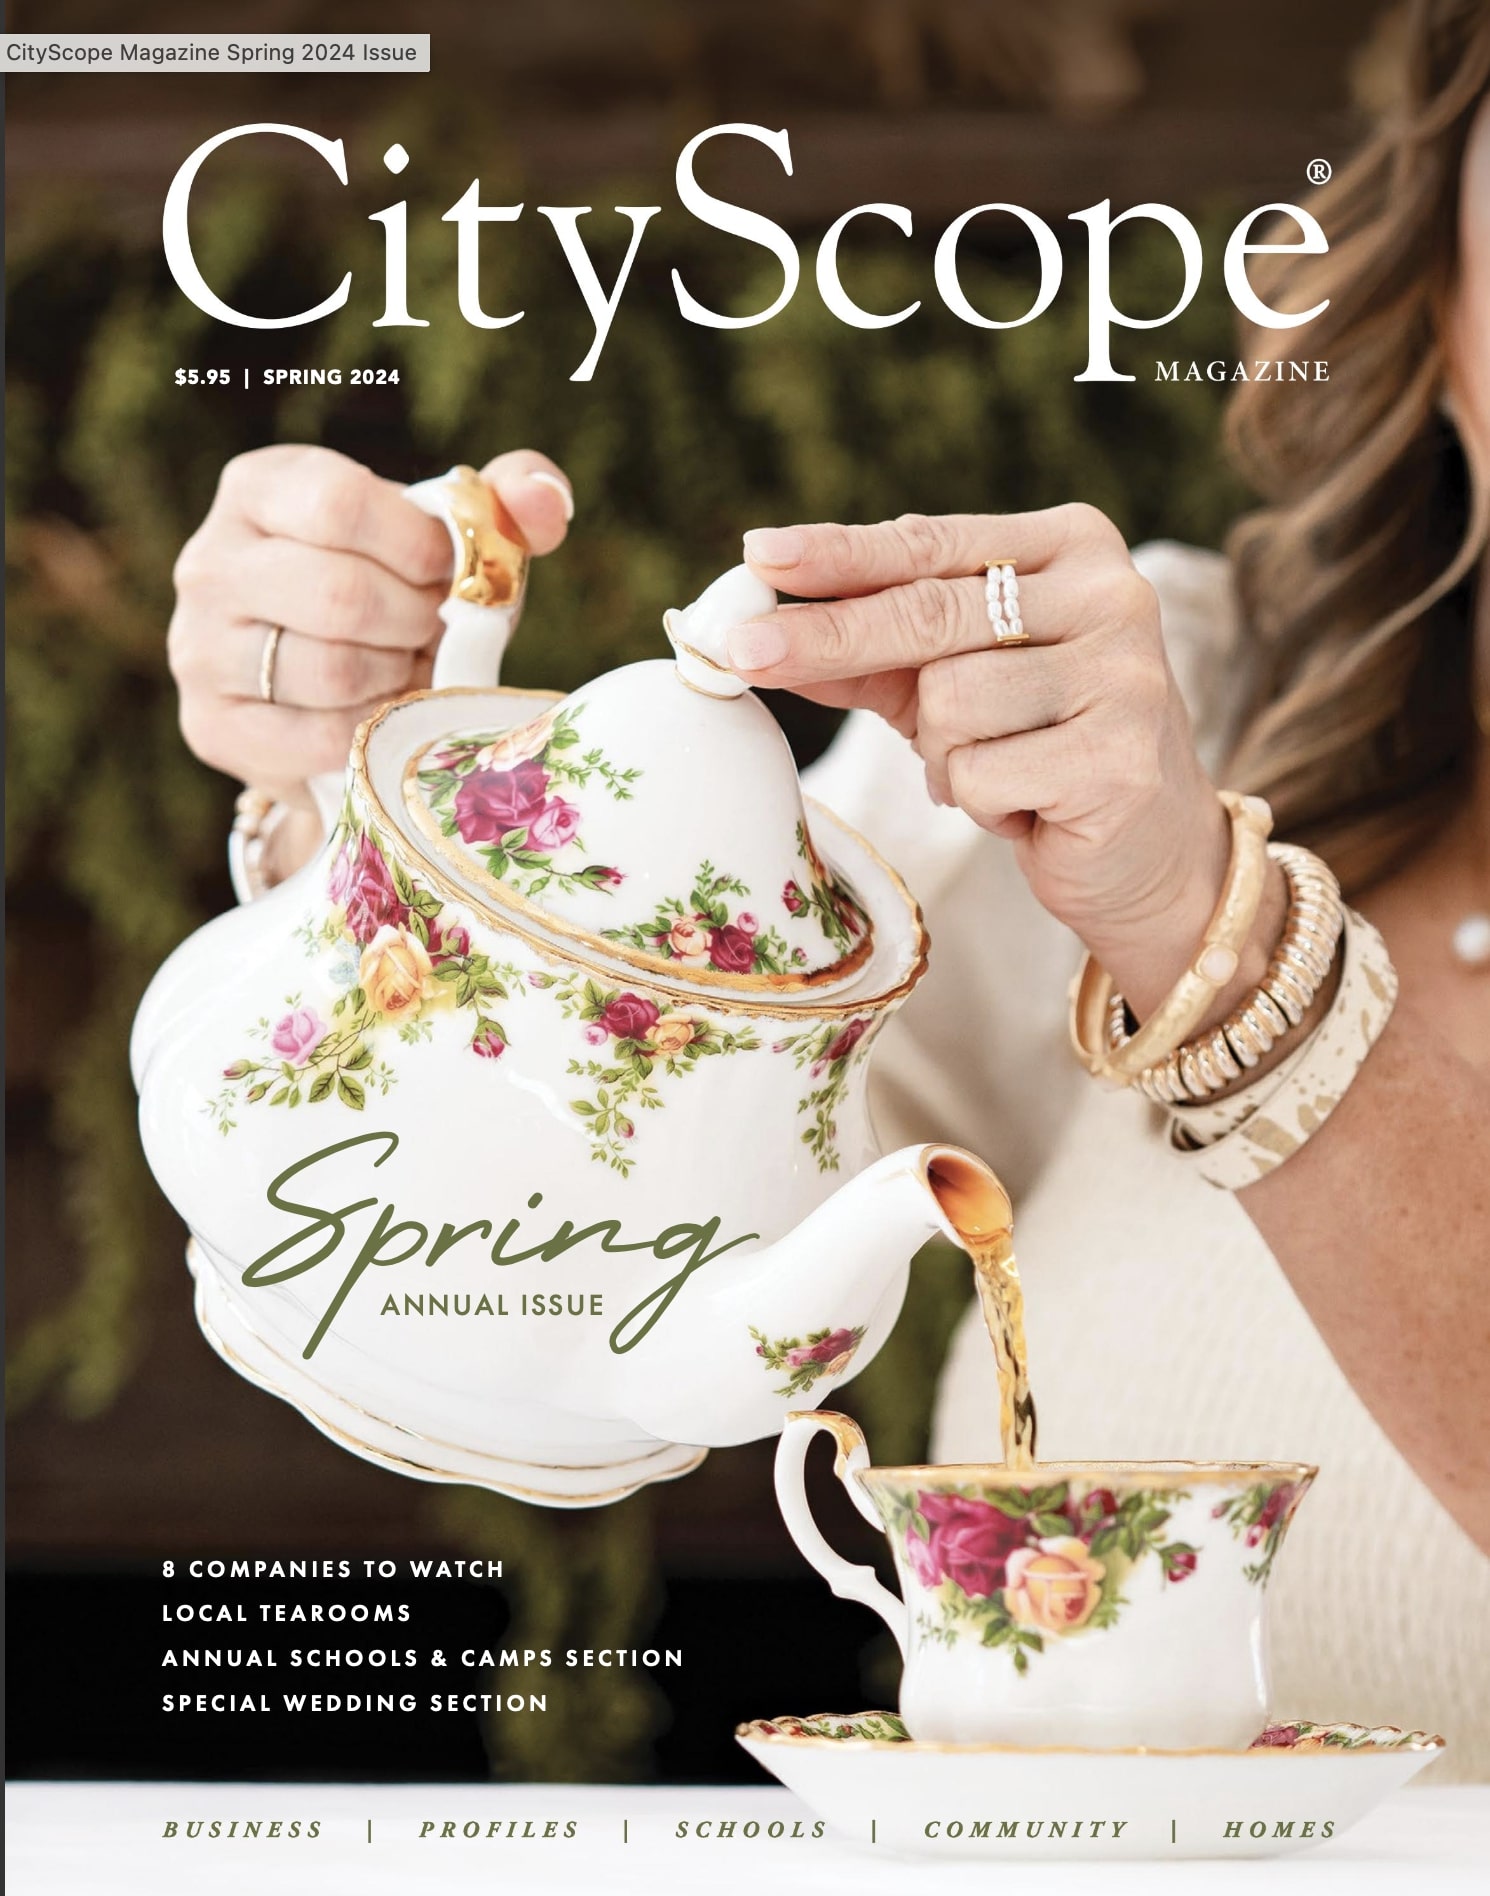 Cityscope magainze chattanooga featuring chattanooga photographer alyssa rachelle photography